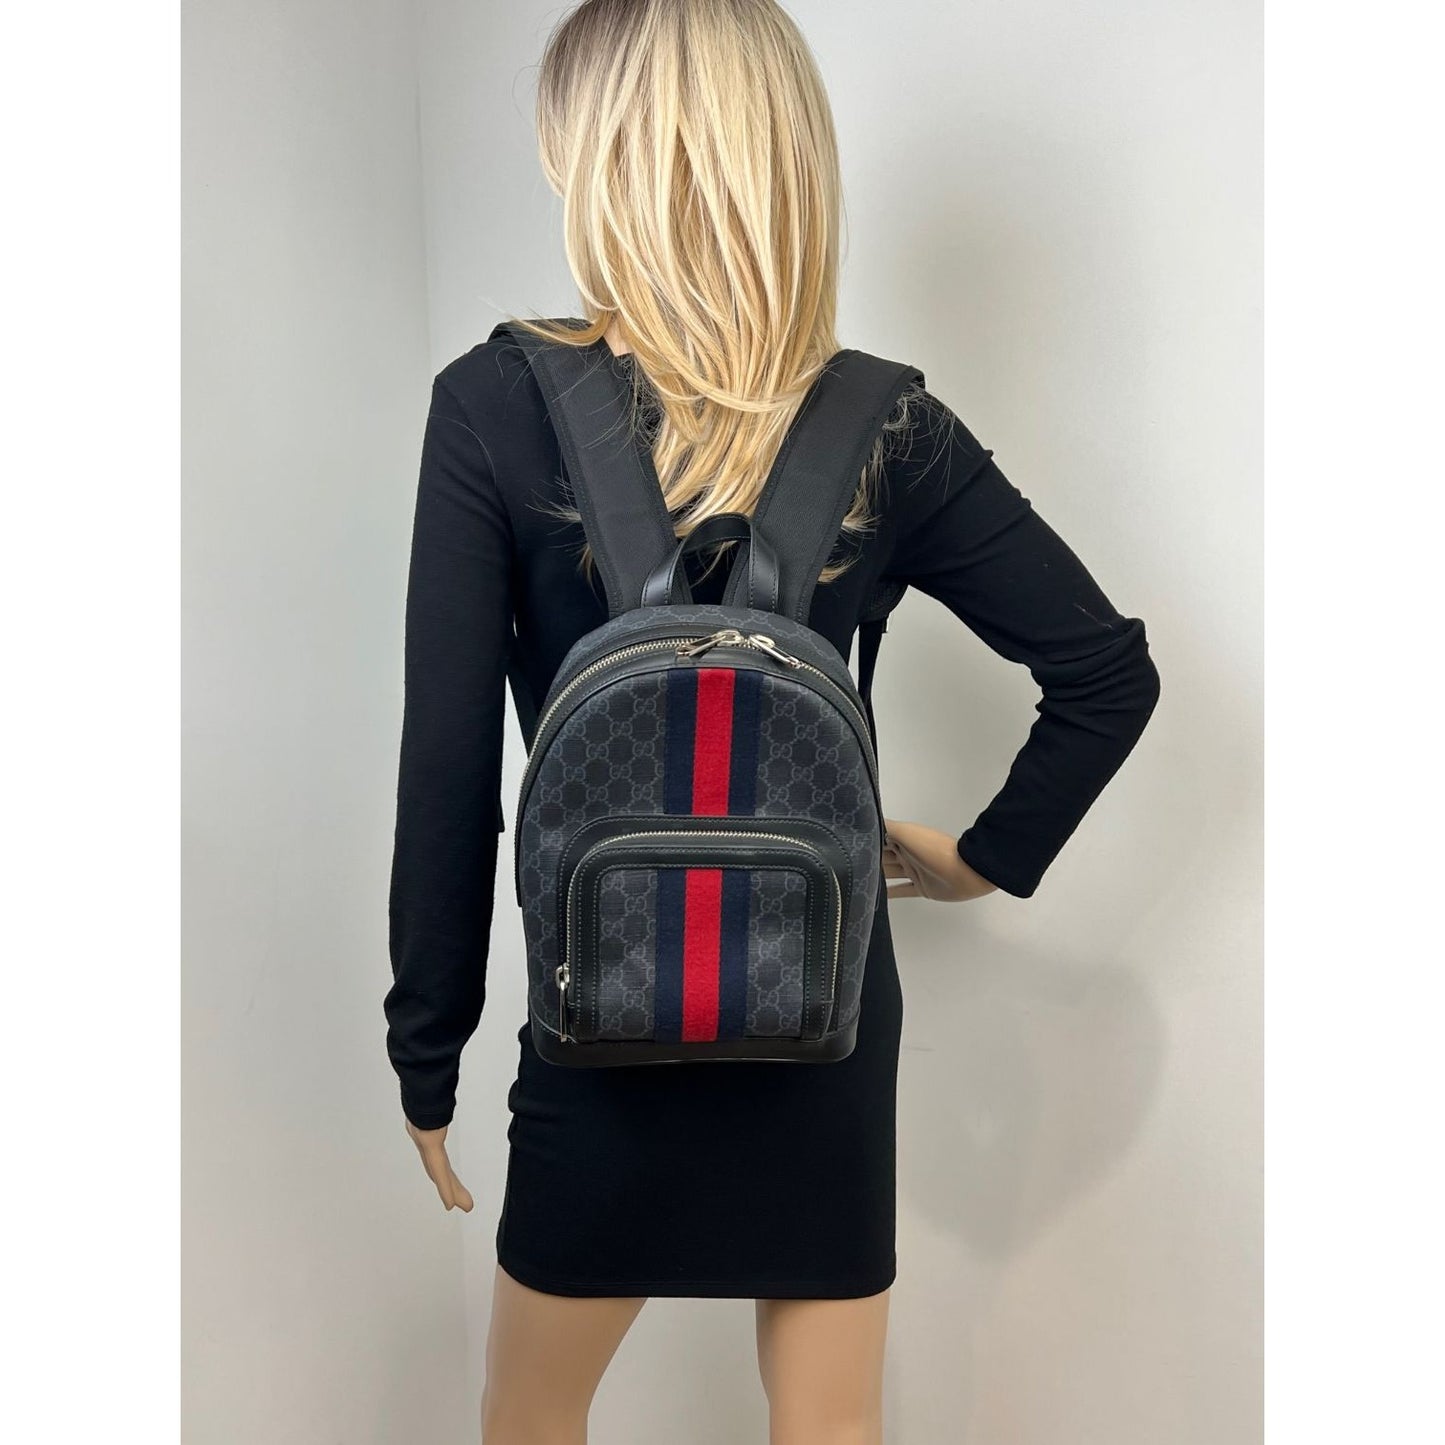 Gucci gg Supreme Monogrammed Backpack in Grey for Men